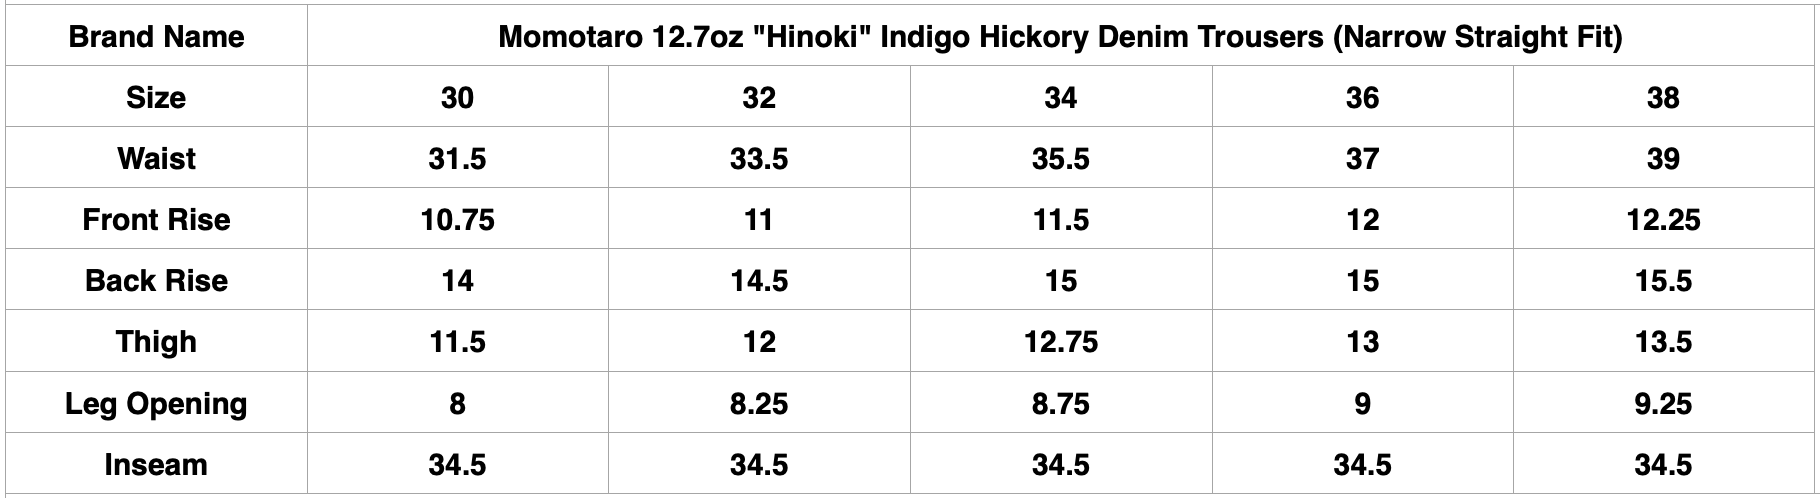 Momotaro 12.7oz "Hinoki" Indigo Hickory Denim Trousers (Narrow Straight Fit)